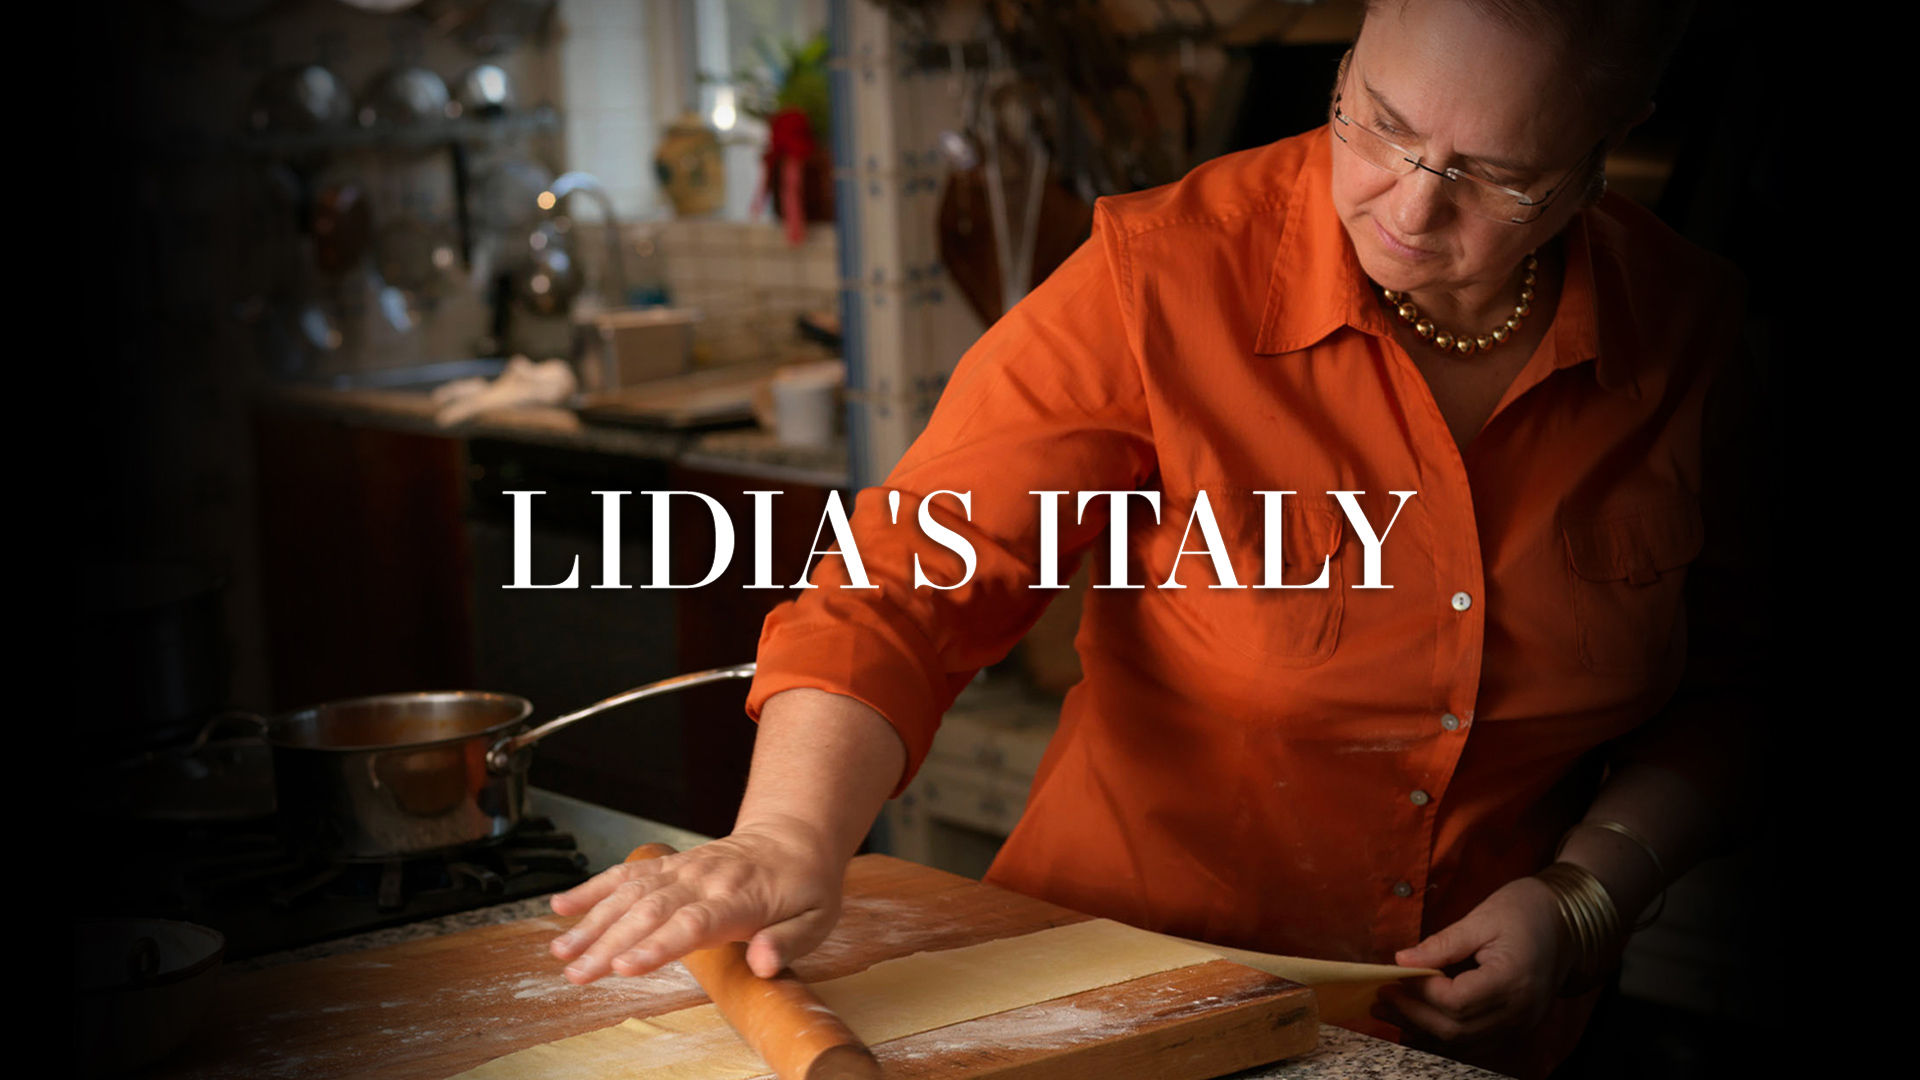 Ver Lidia's Italy por ViX